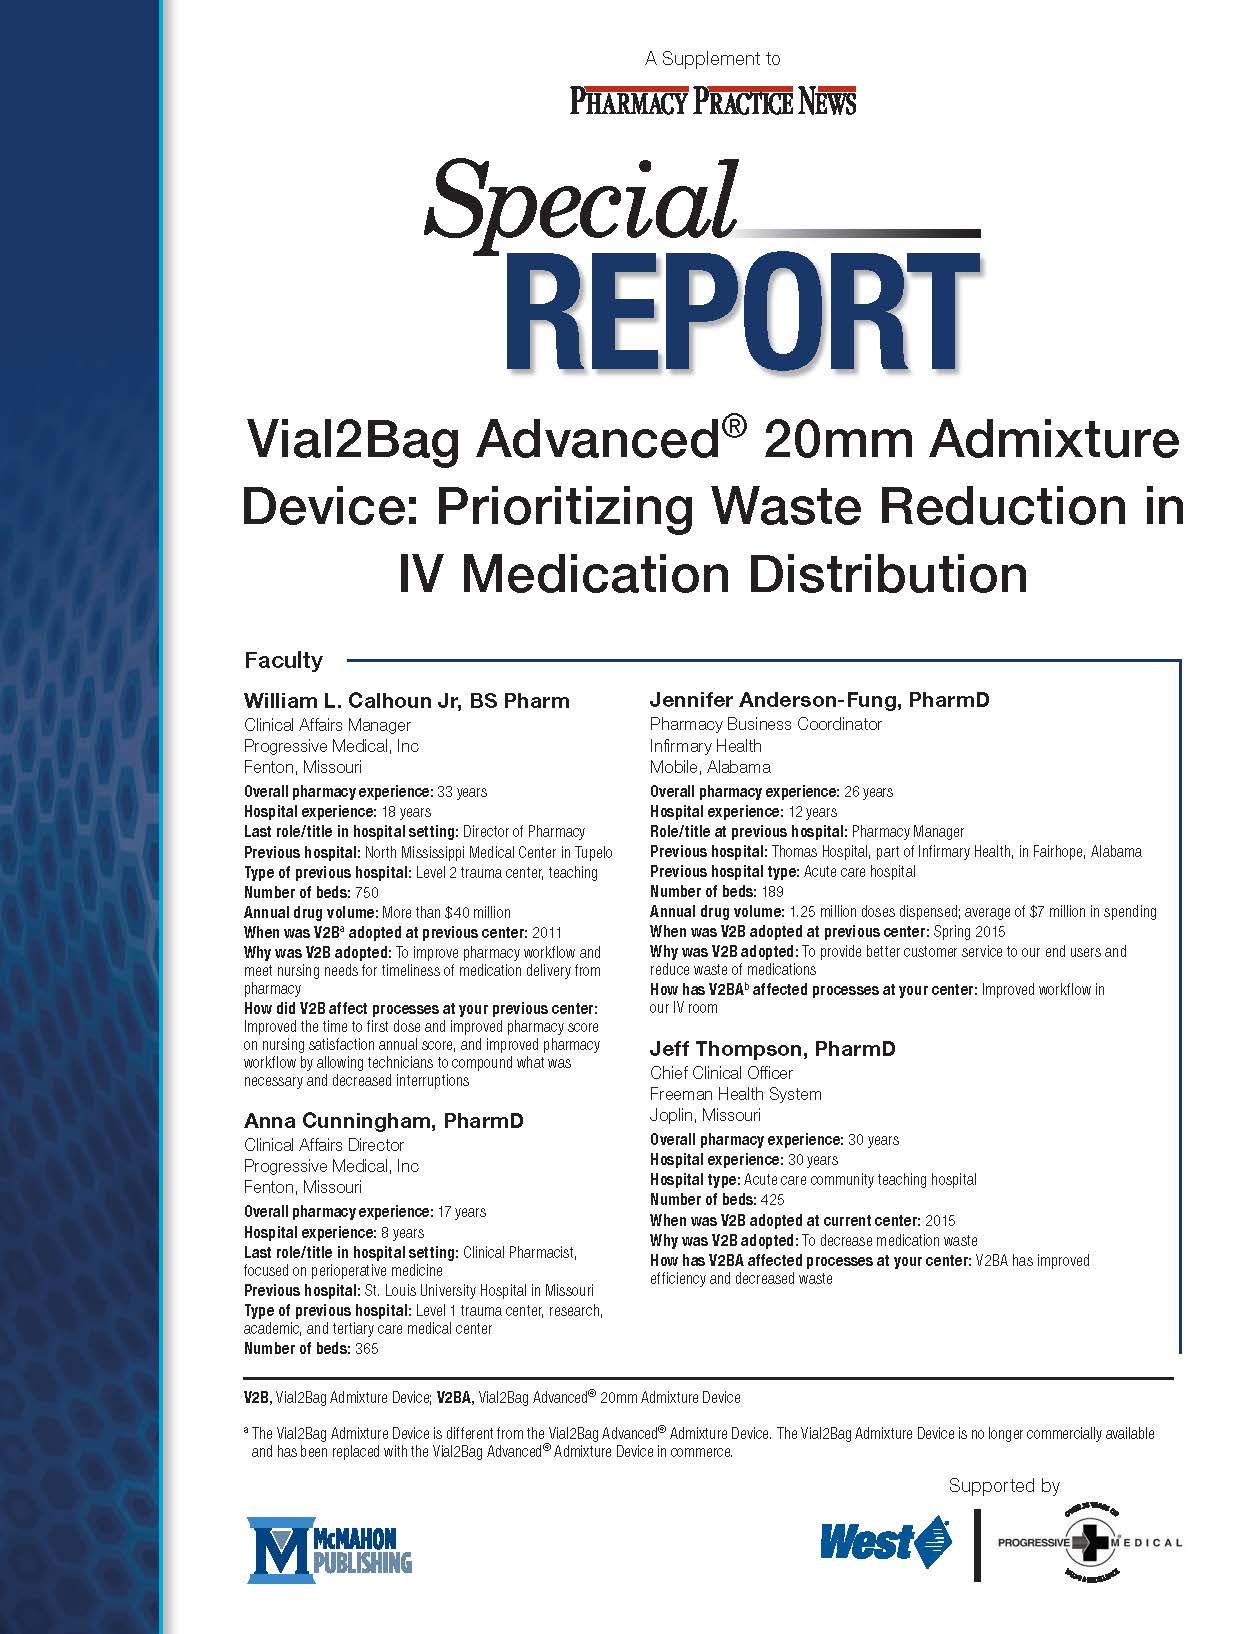 Vial2bag Advanced